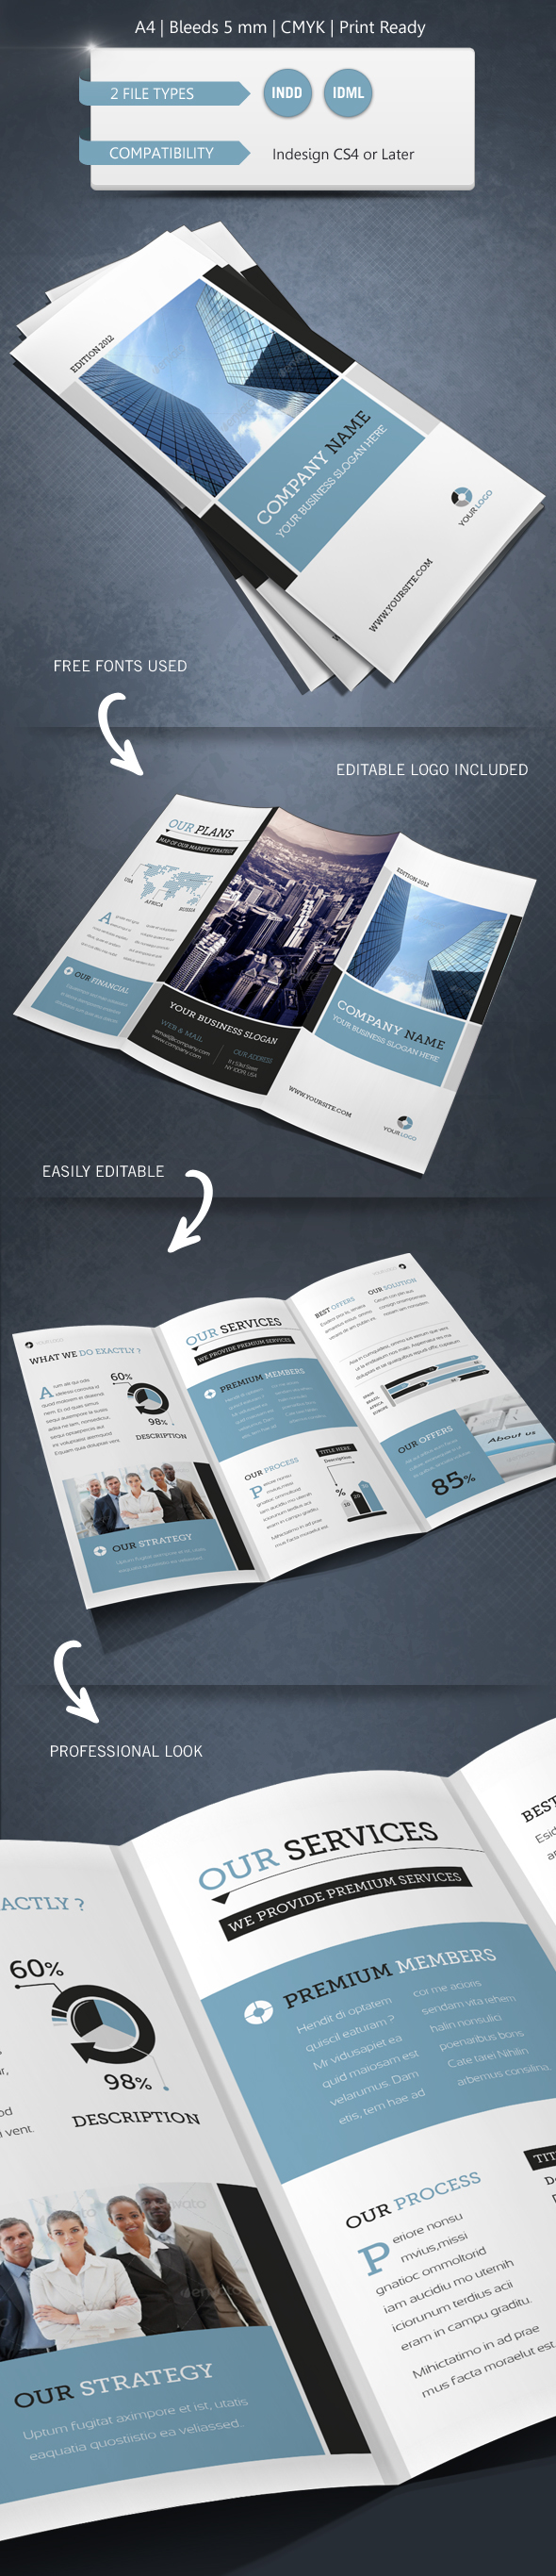 business advertisement trifold brochure blue promote design InDesign photoshop editable marketing   flyer Promotion